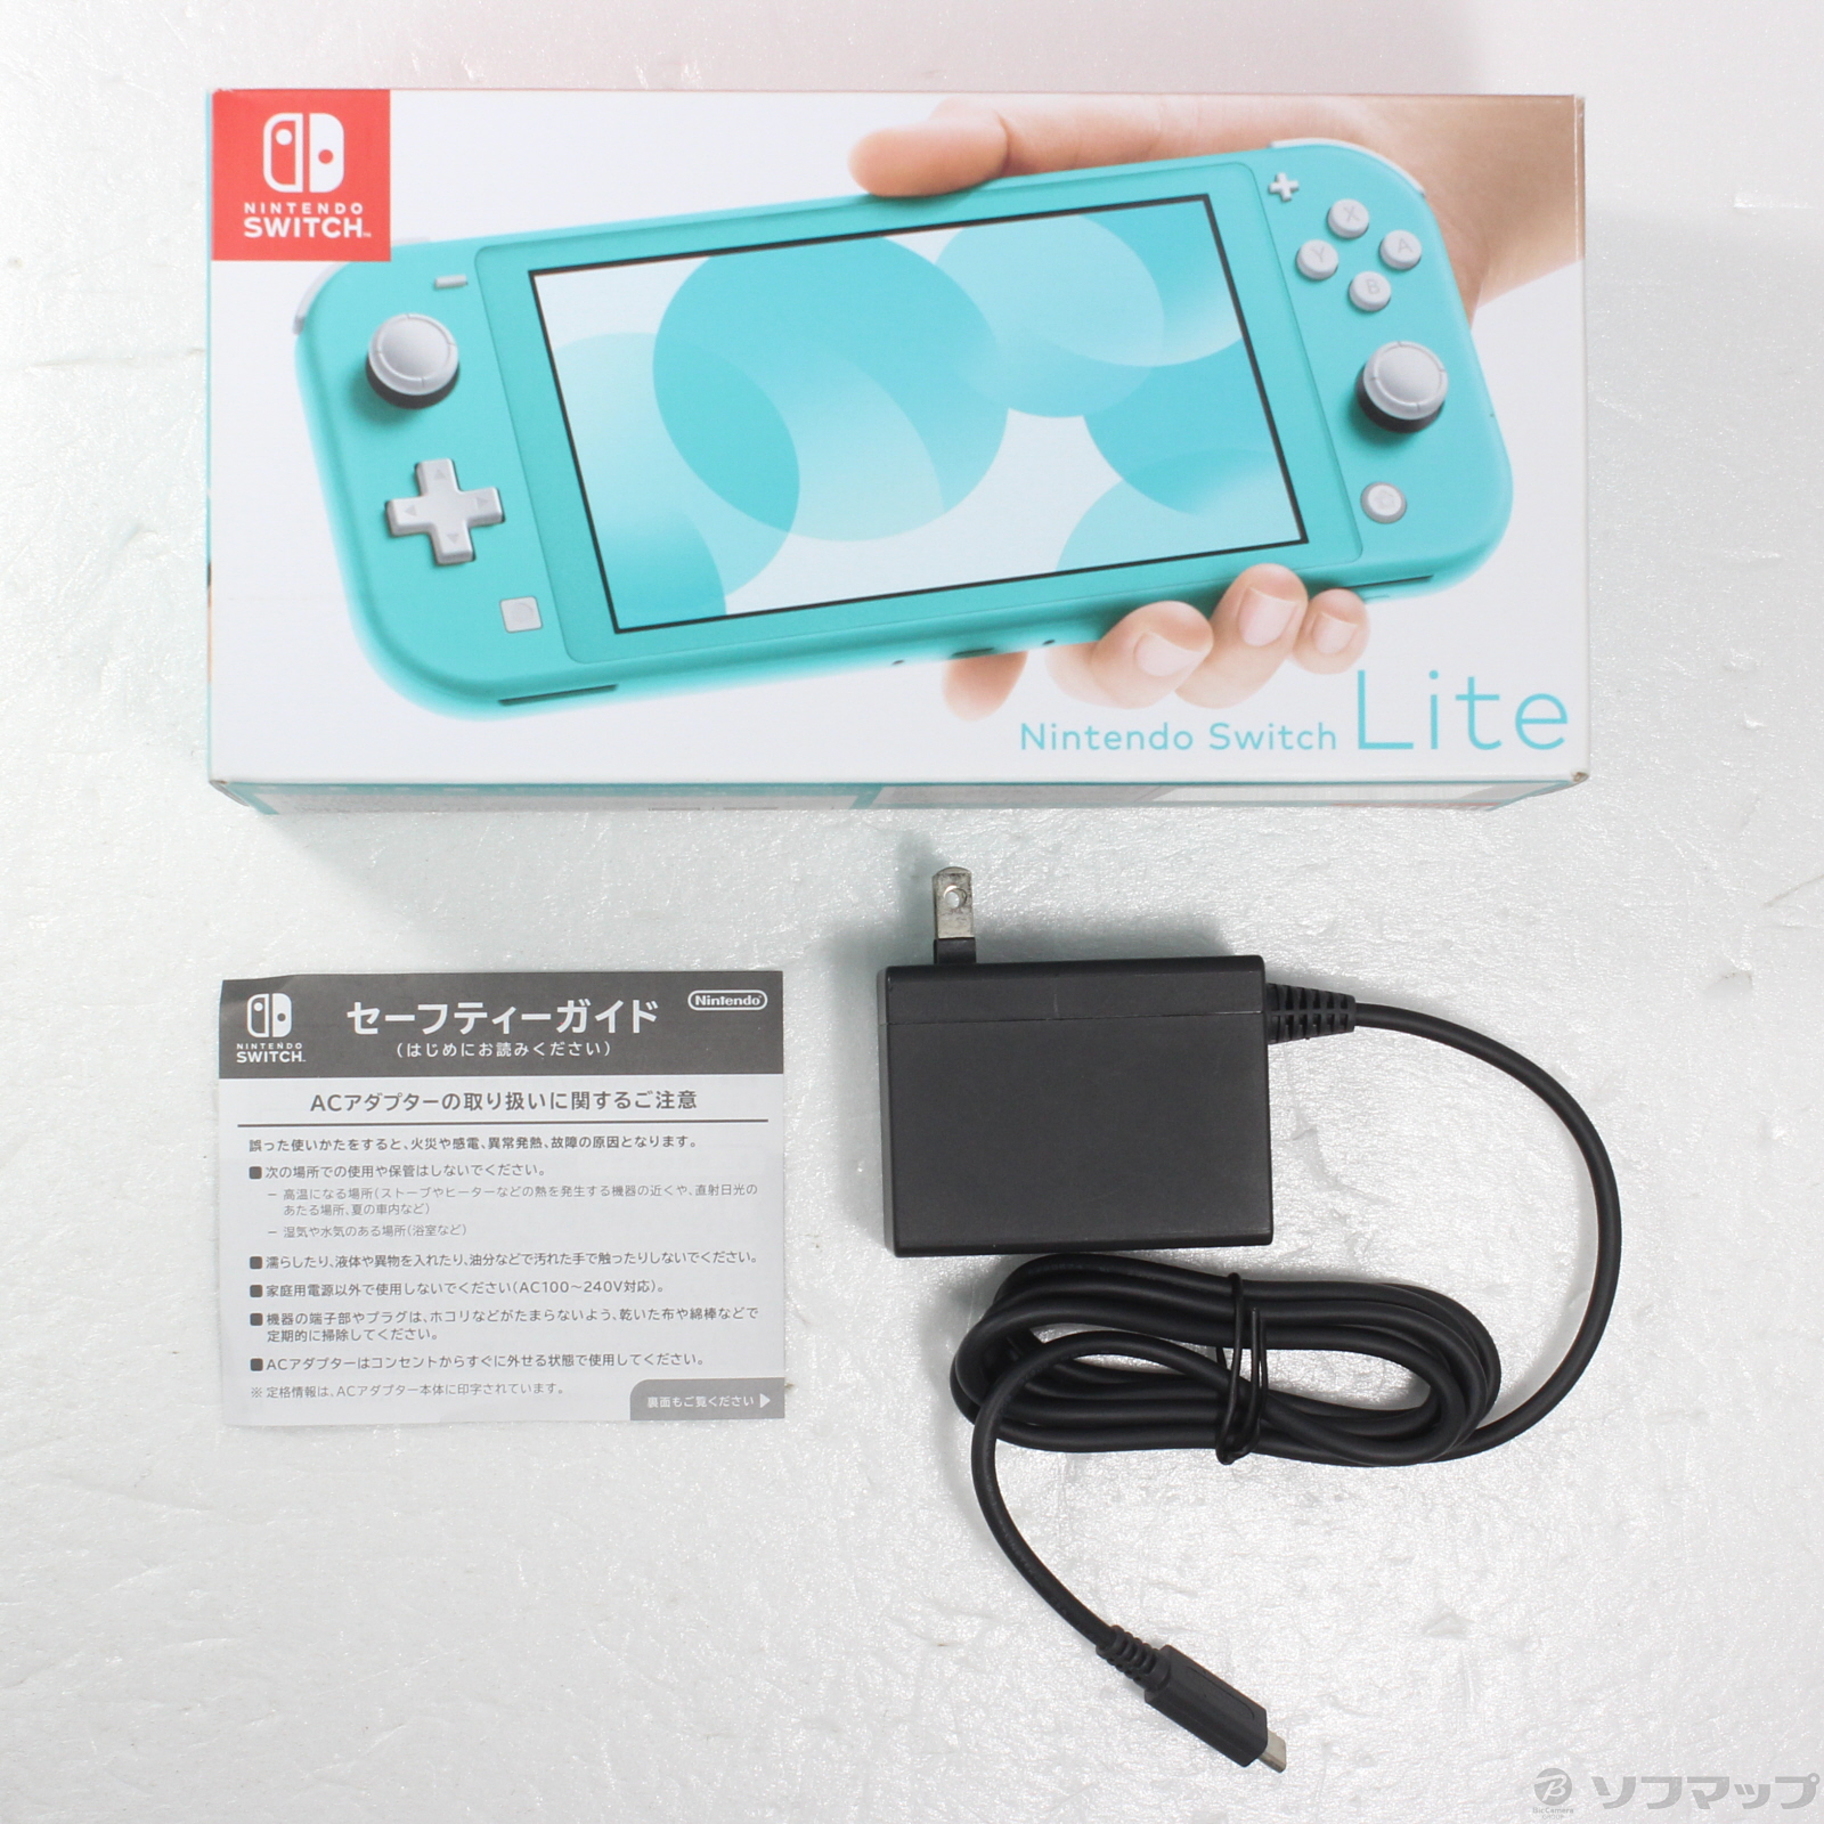 Nintendo Switch Lite 中古品になります。 - lyricspaji.com